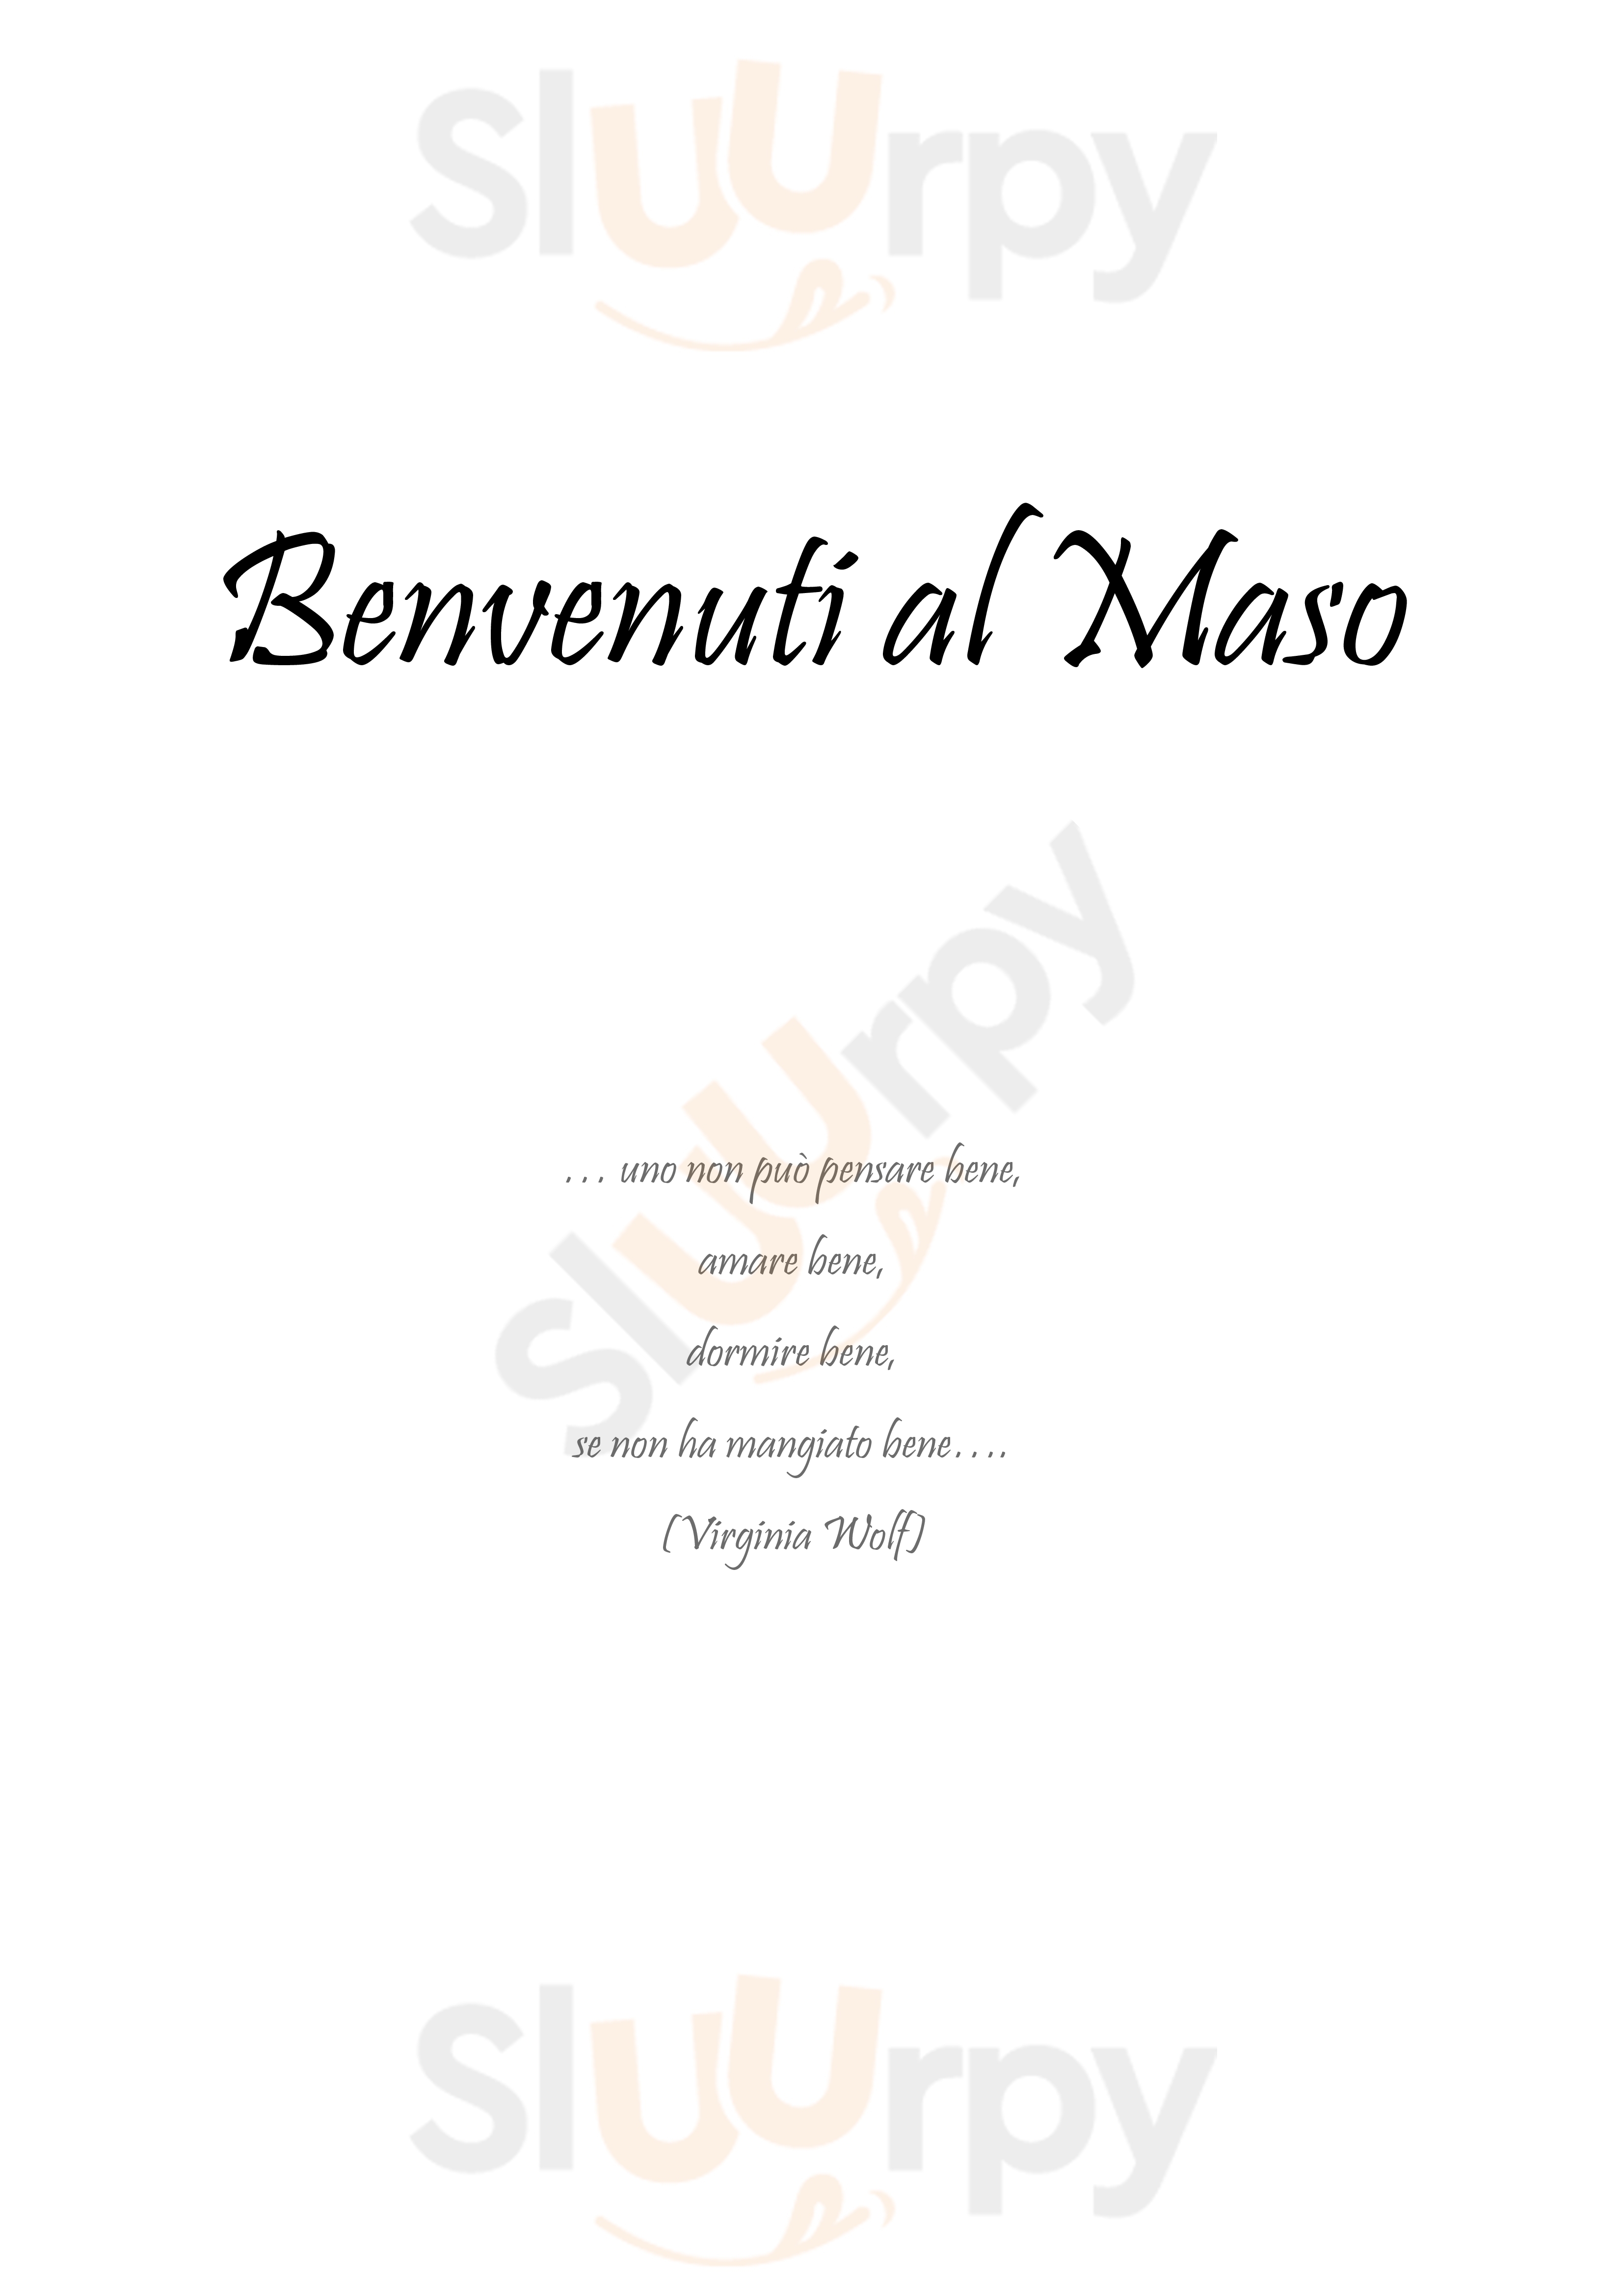 Maso del Brenta Caderzone Terme menù 1 pagina